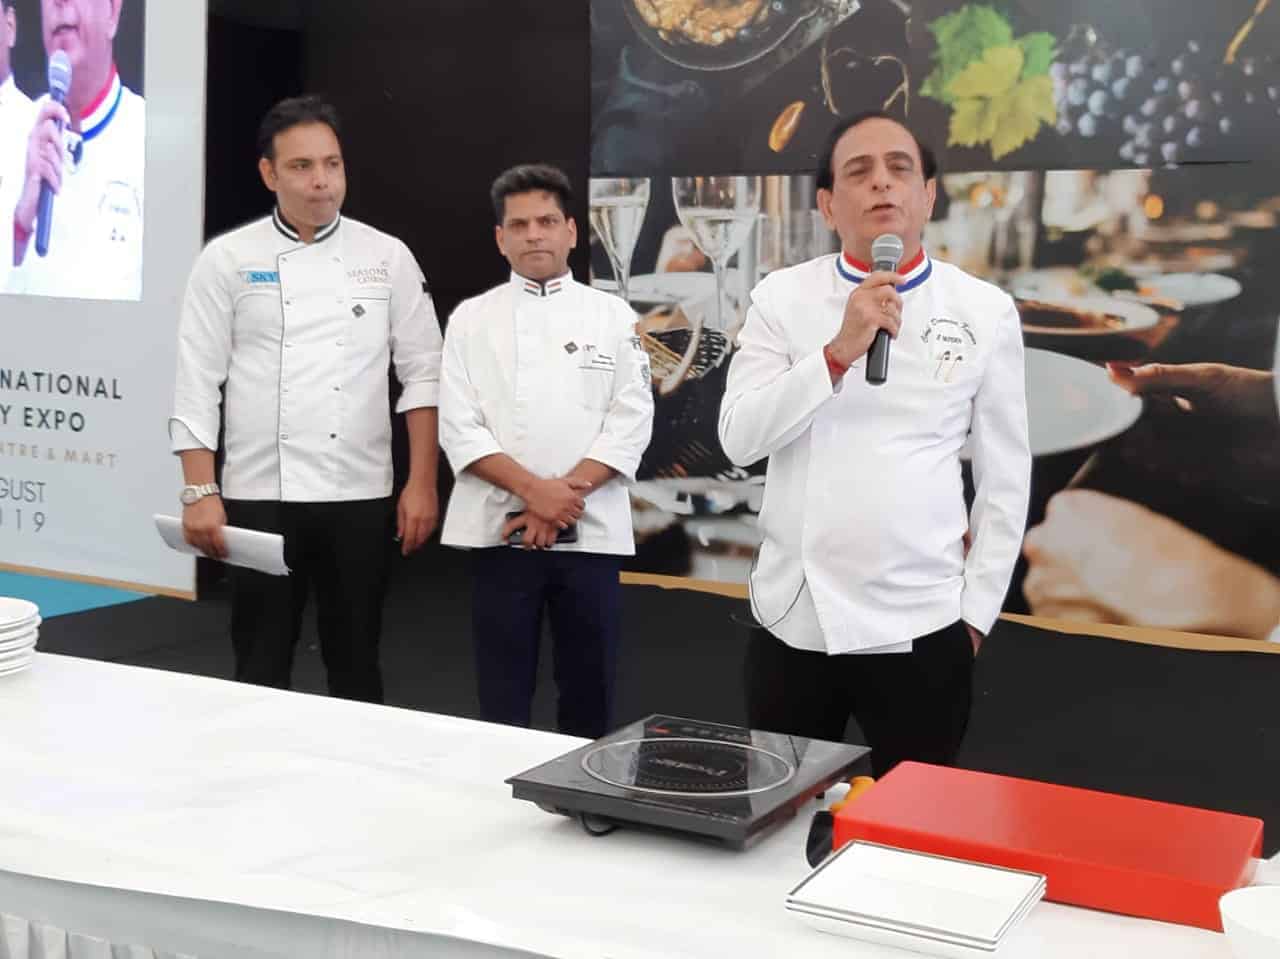 ChefDK at India International Hospitality Expo 2019